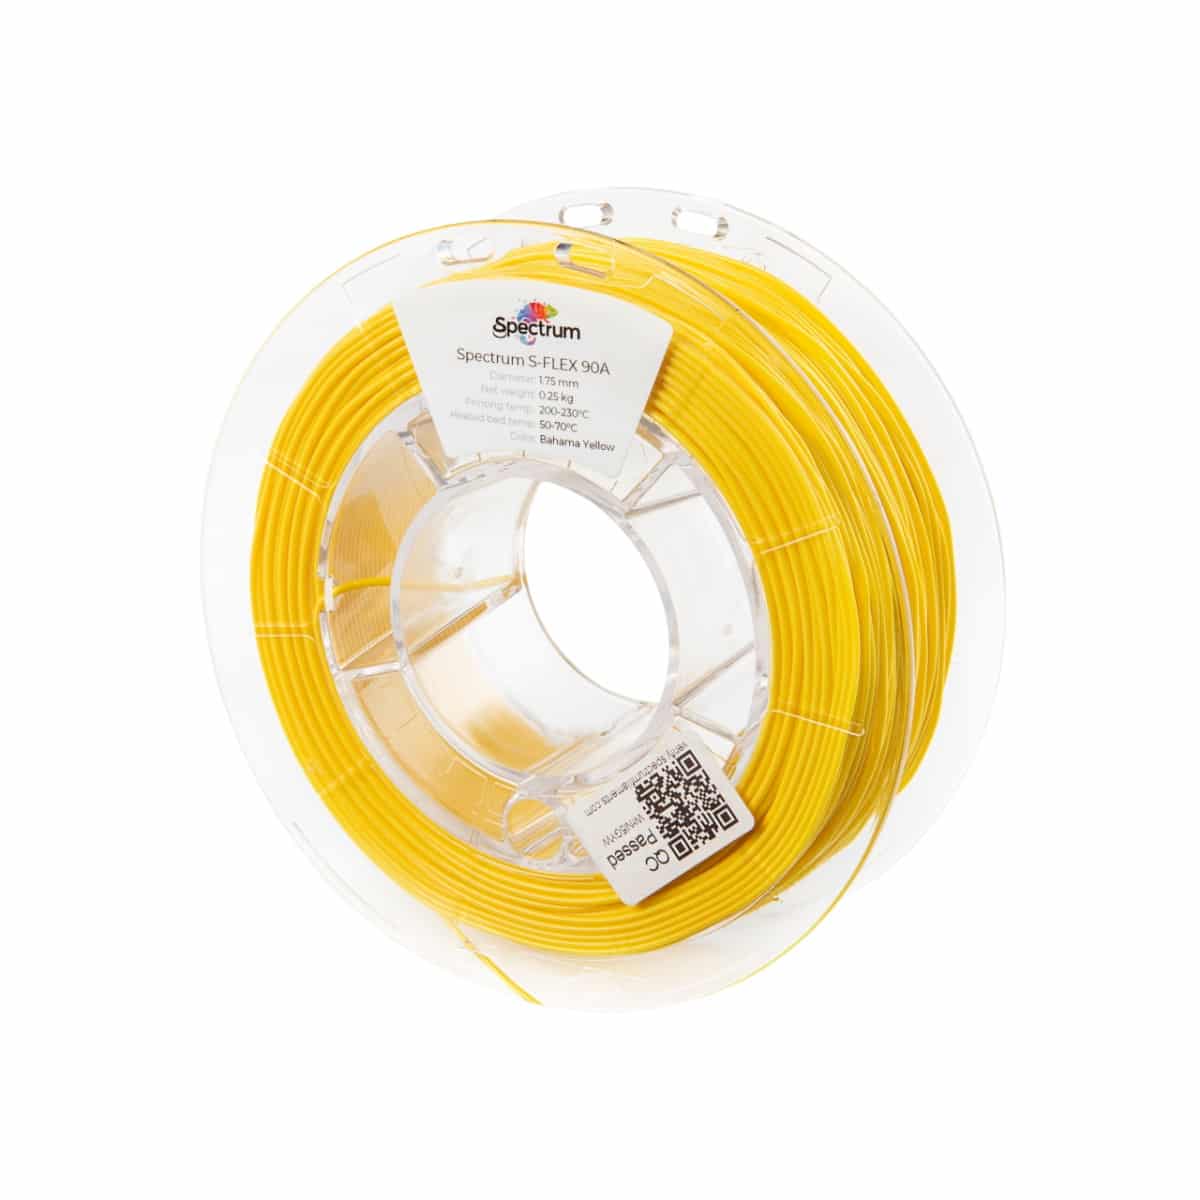 Køb Spectrum Filaments - S-Flex 90A - 1.75mm - Bahama Yellow - 0.25kg filament - Pris 140.00 kr.